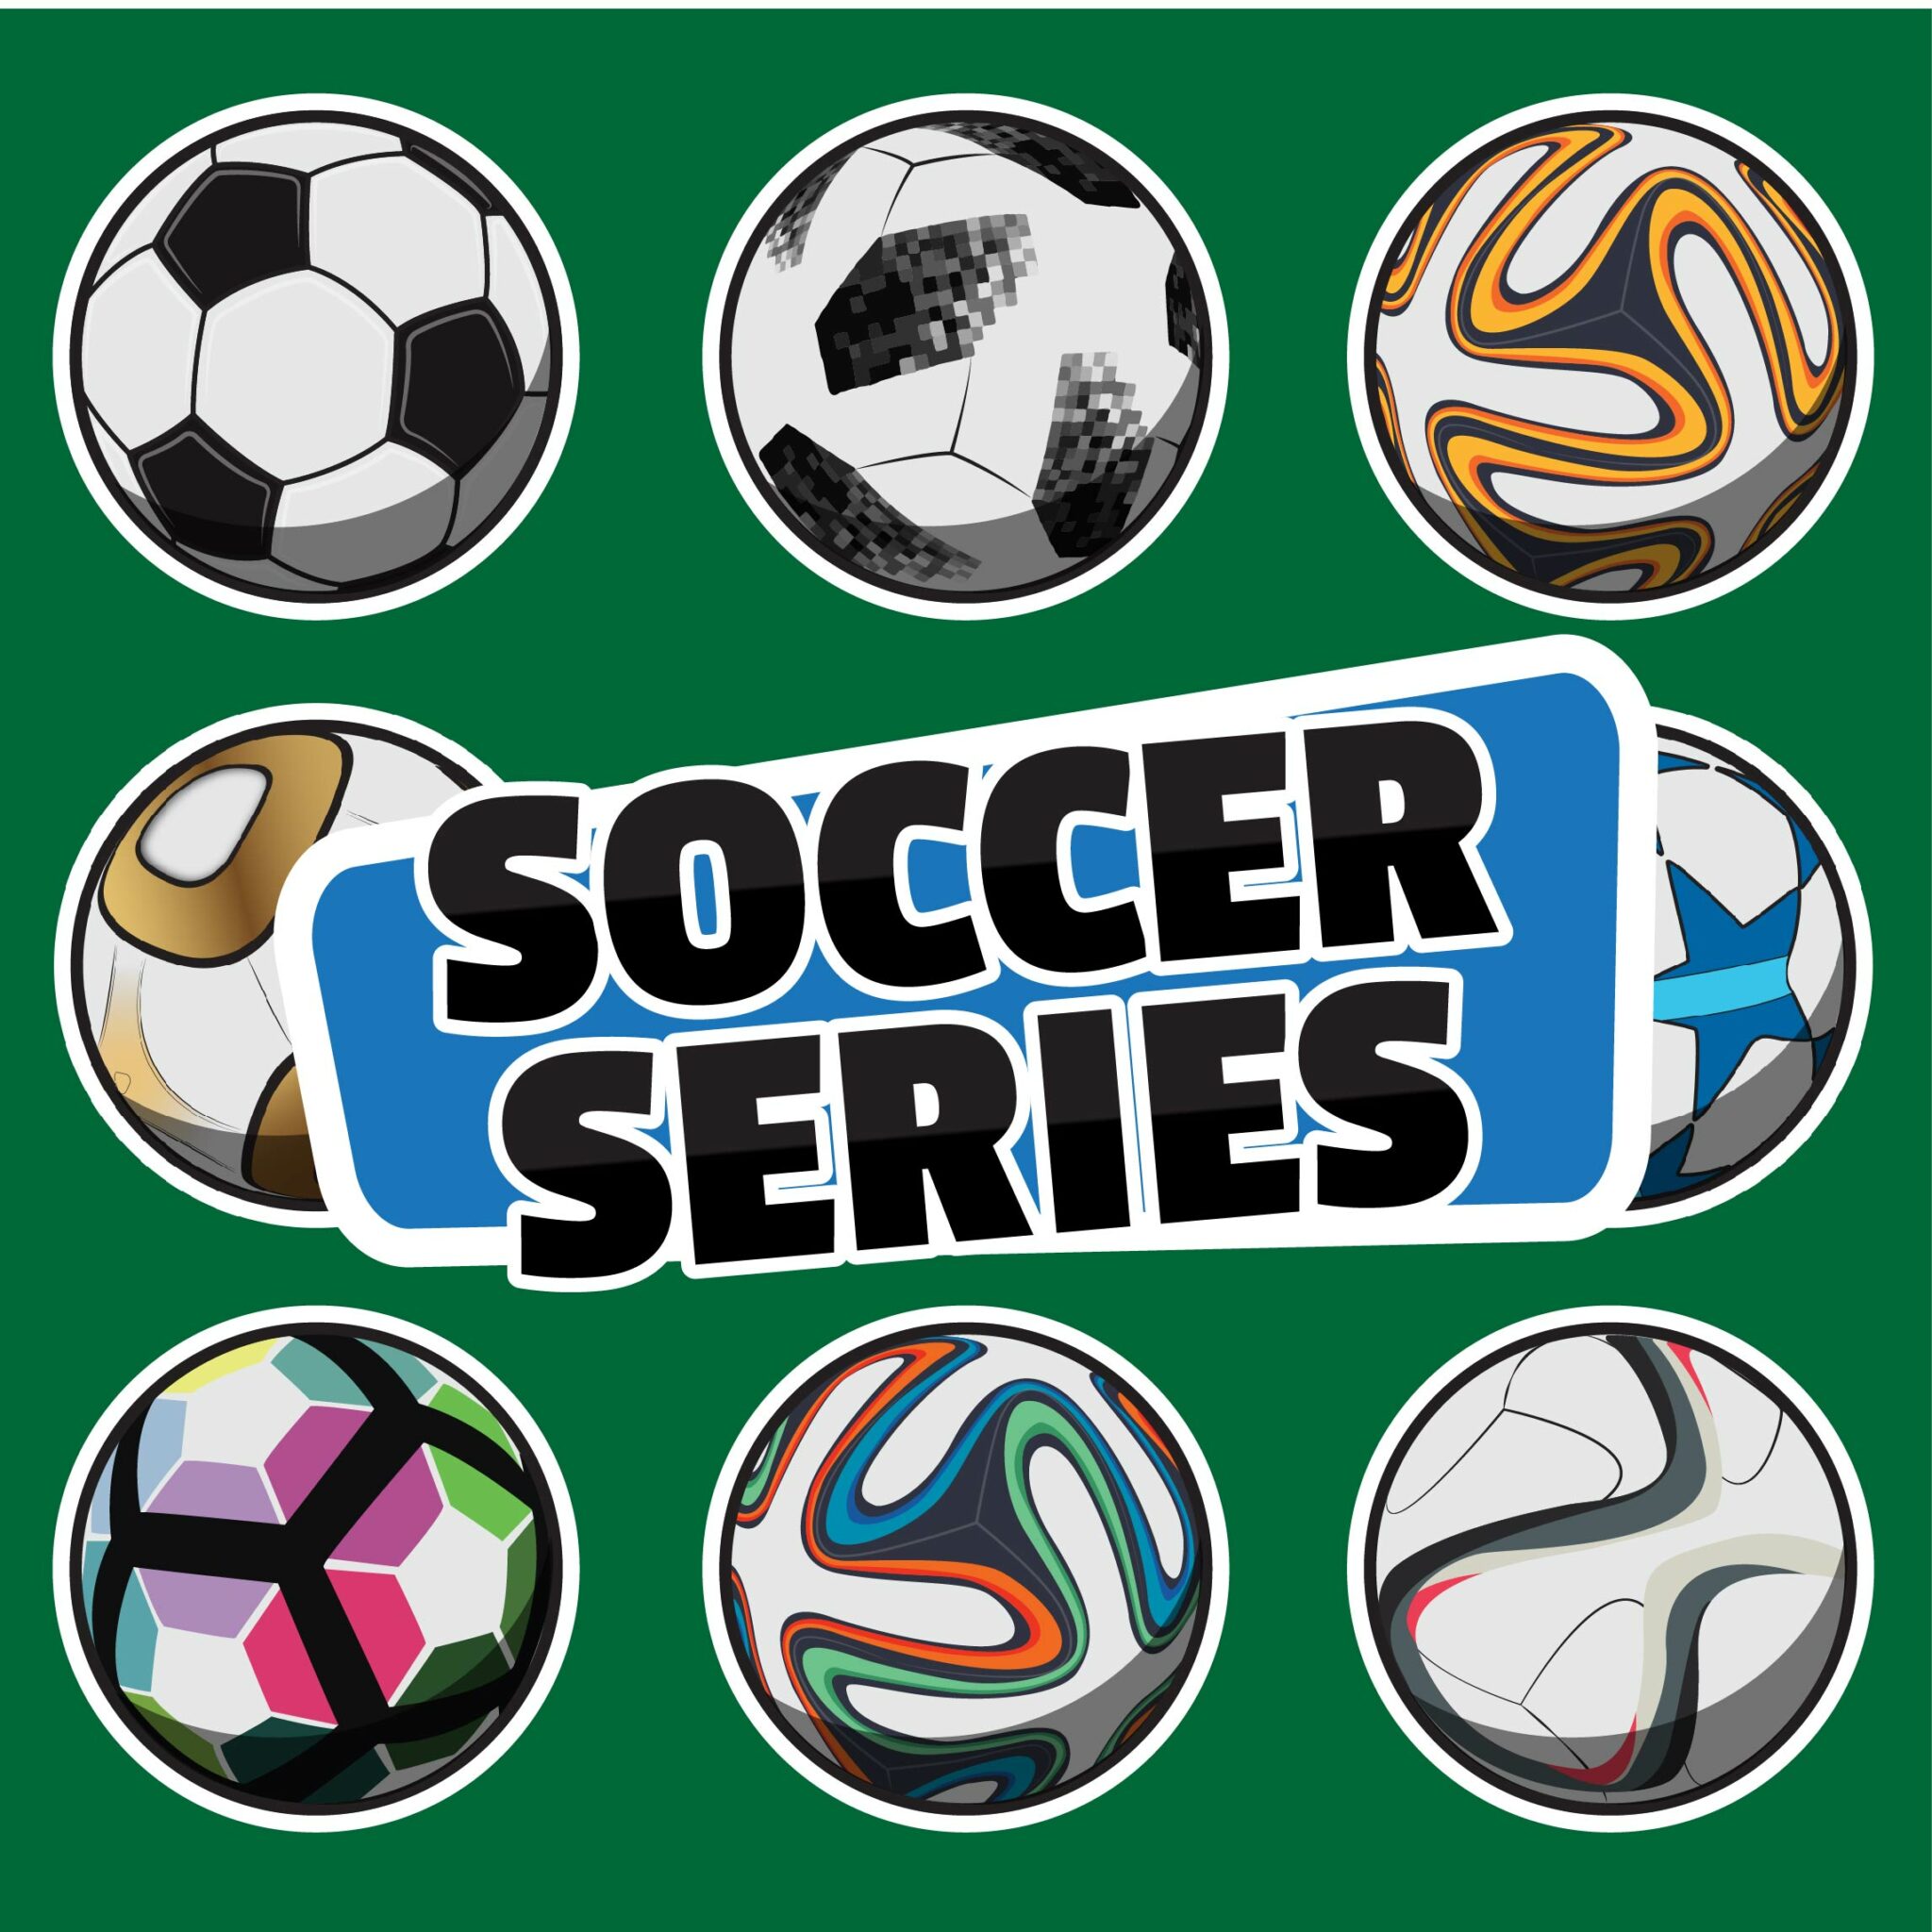 Flat design soccer ball series cover image.